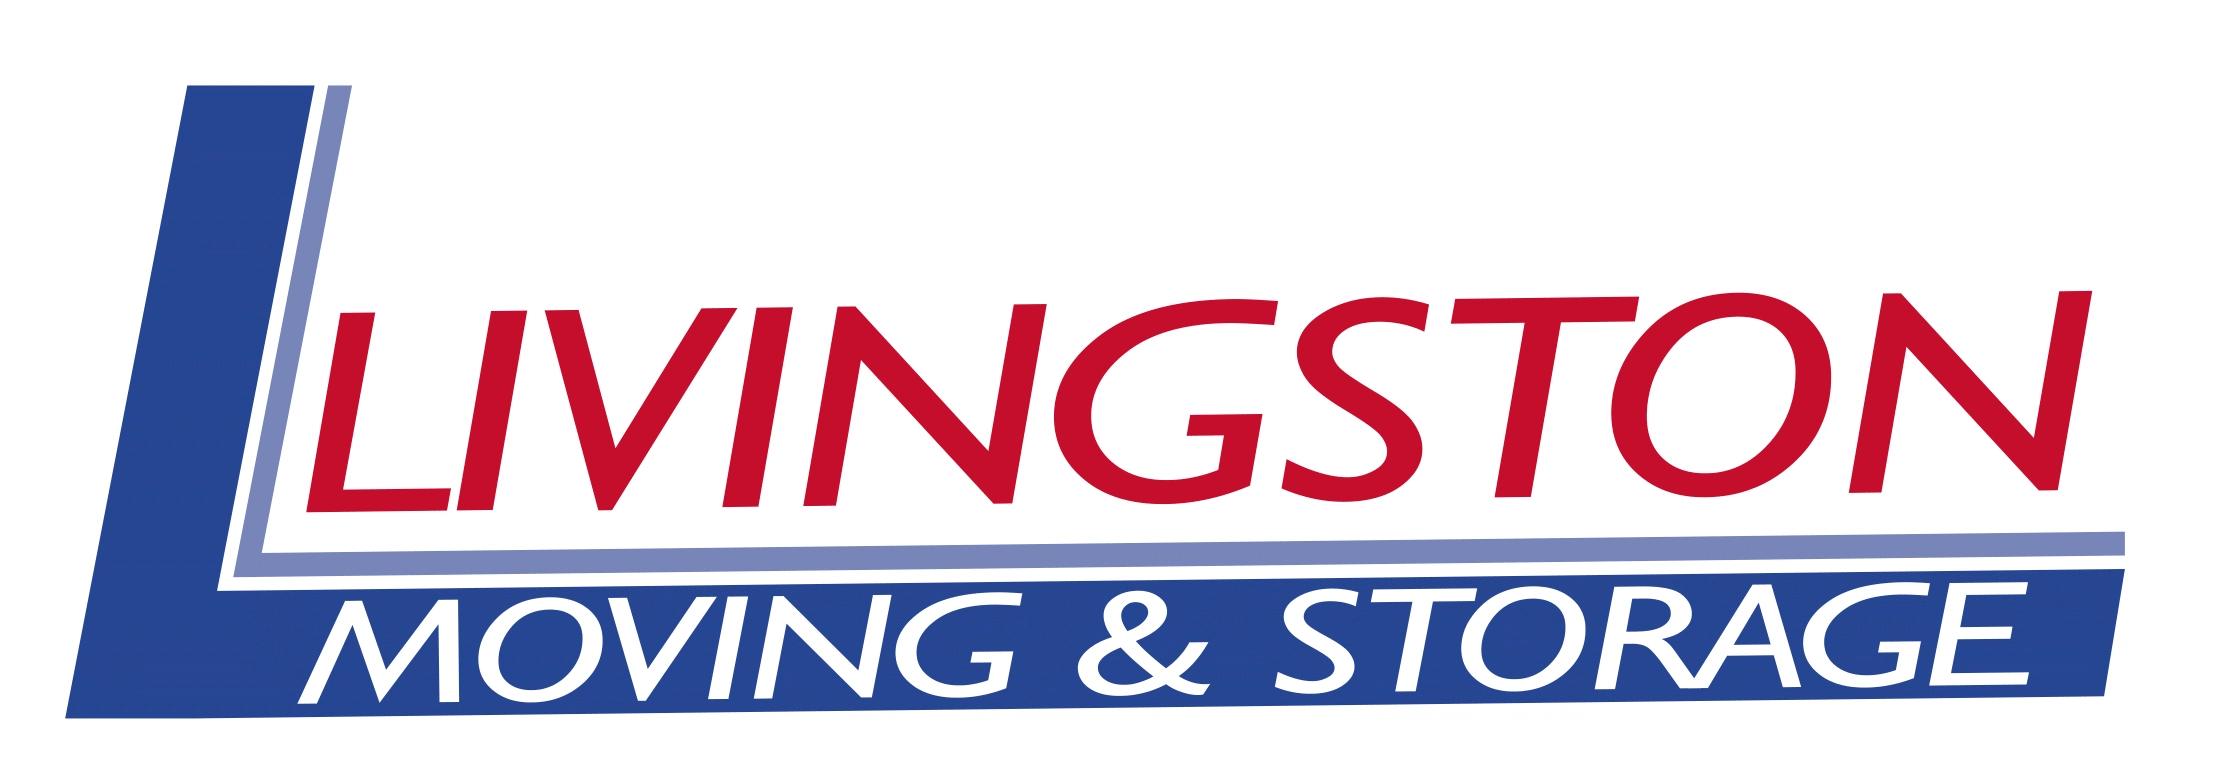 Livingston Moving & Storage Logo